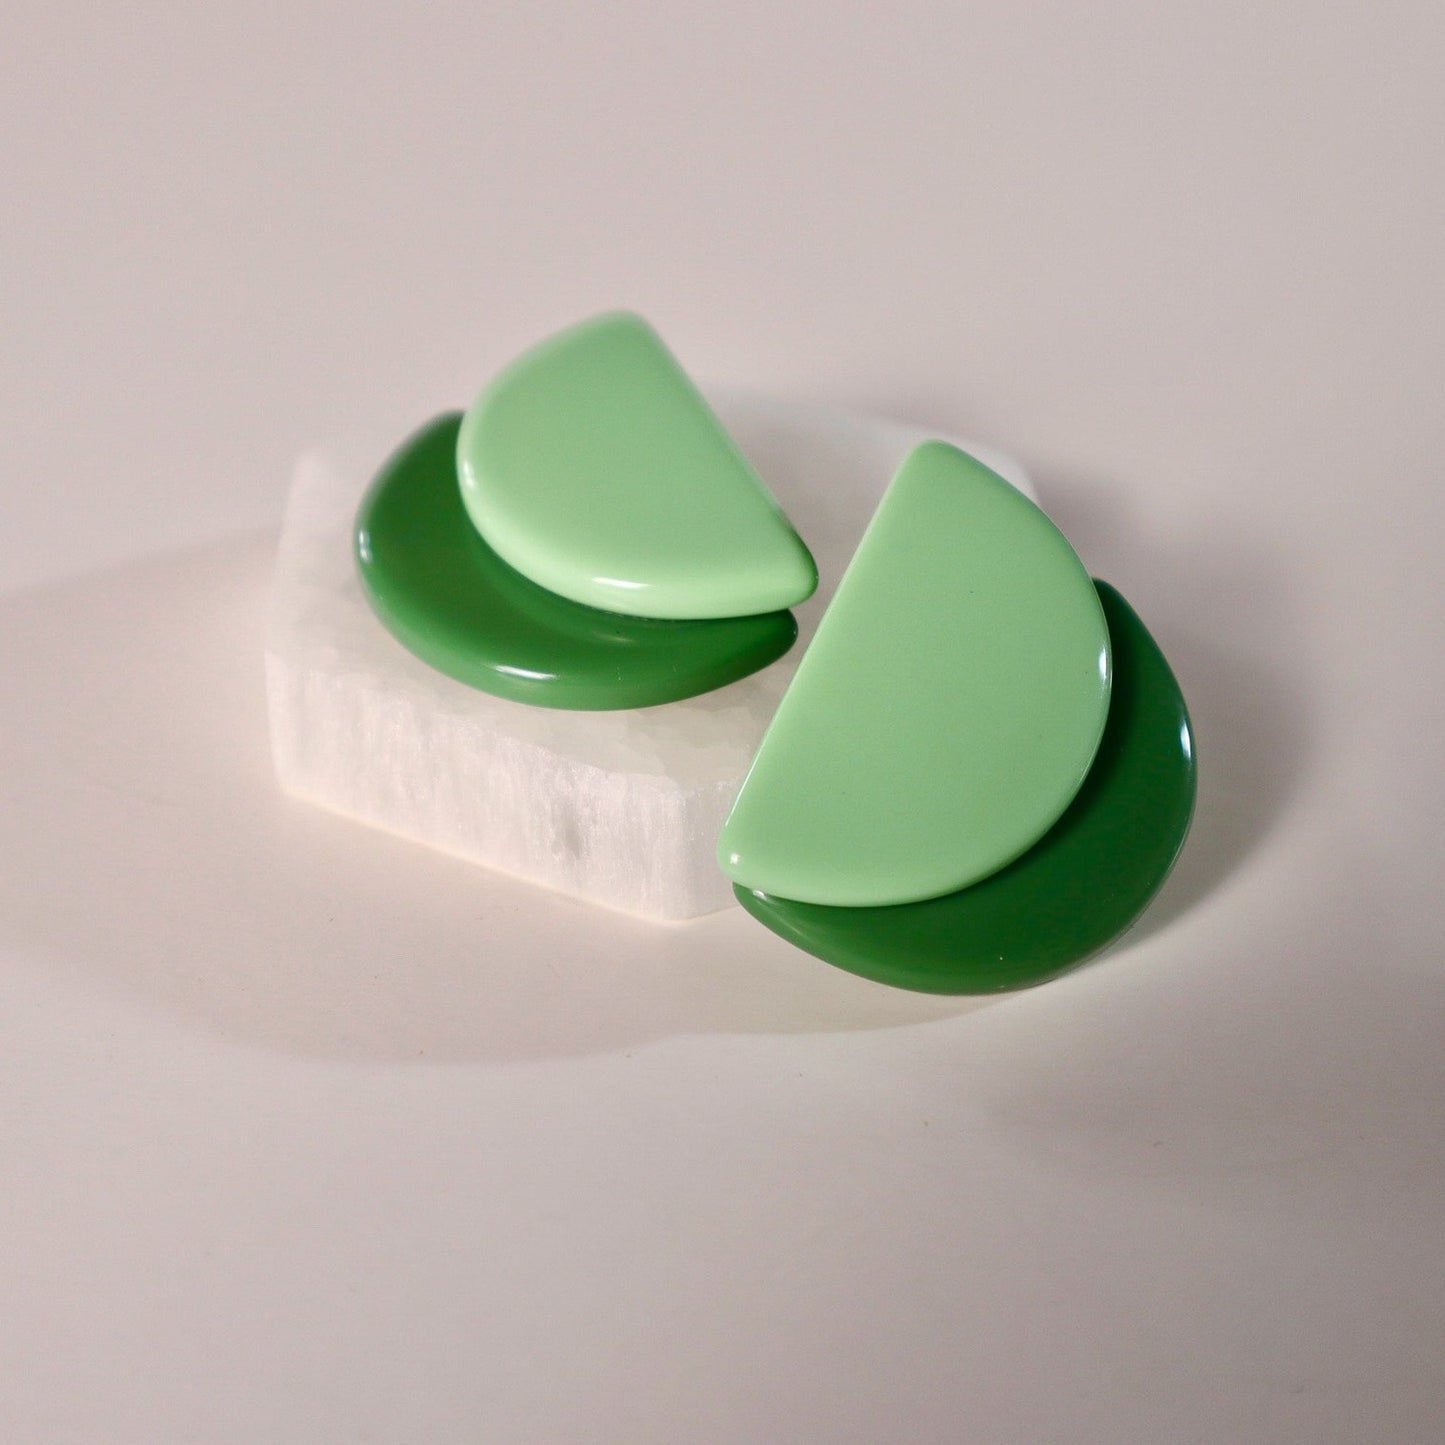 Semi Circles Resin Earrings in Mint Green